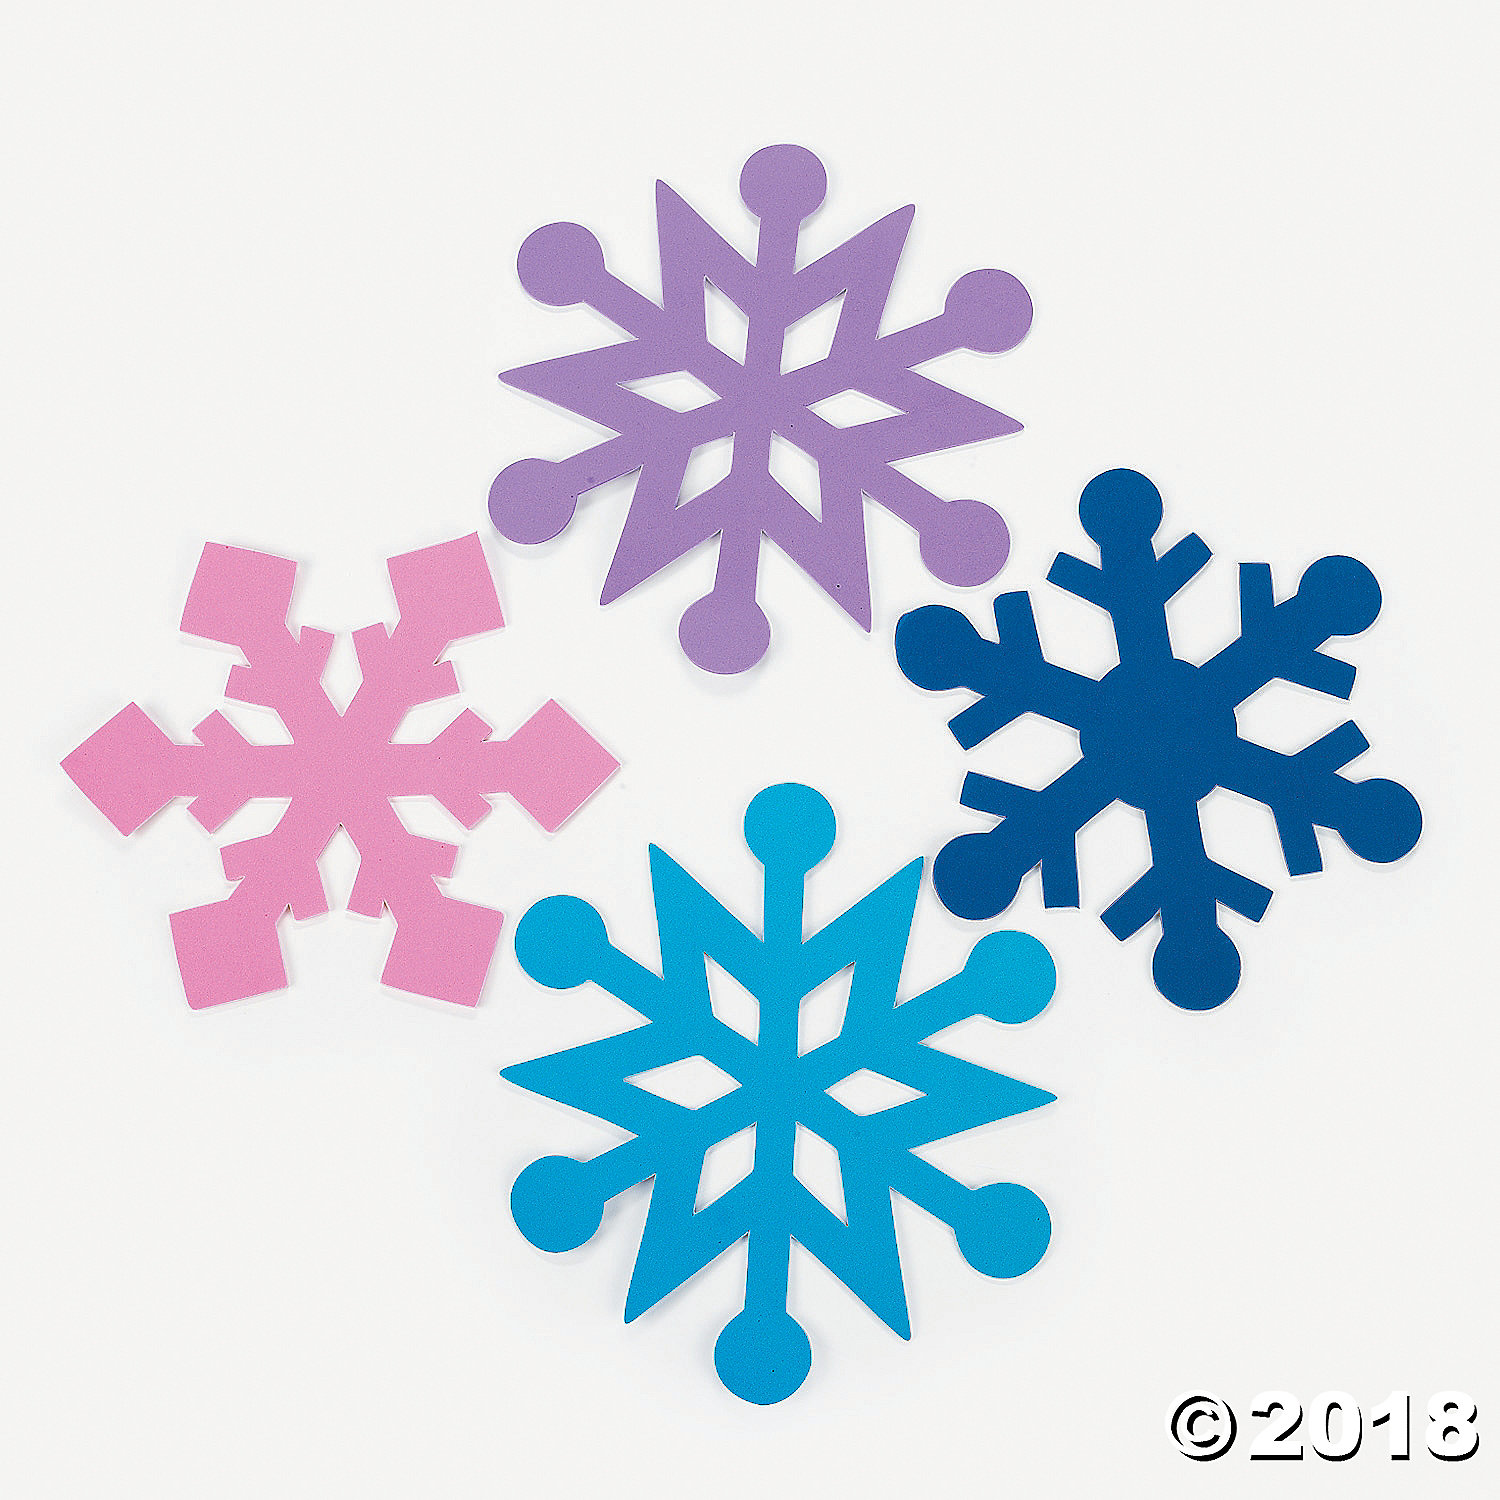 Fabulous Foam Jumbo Snowflakes